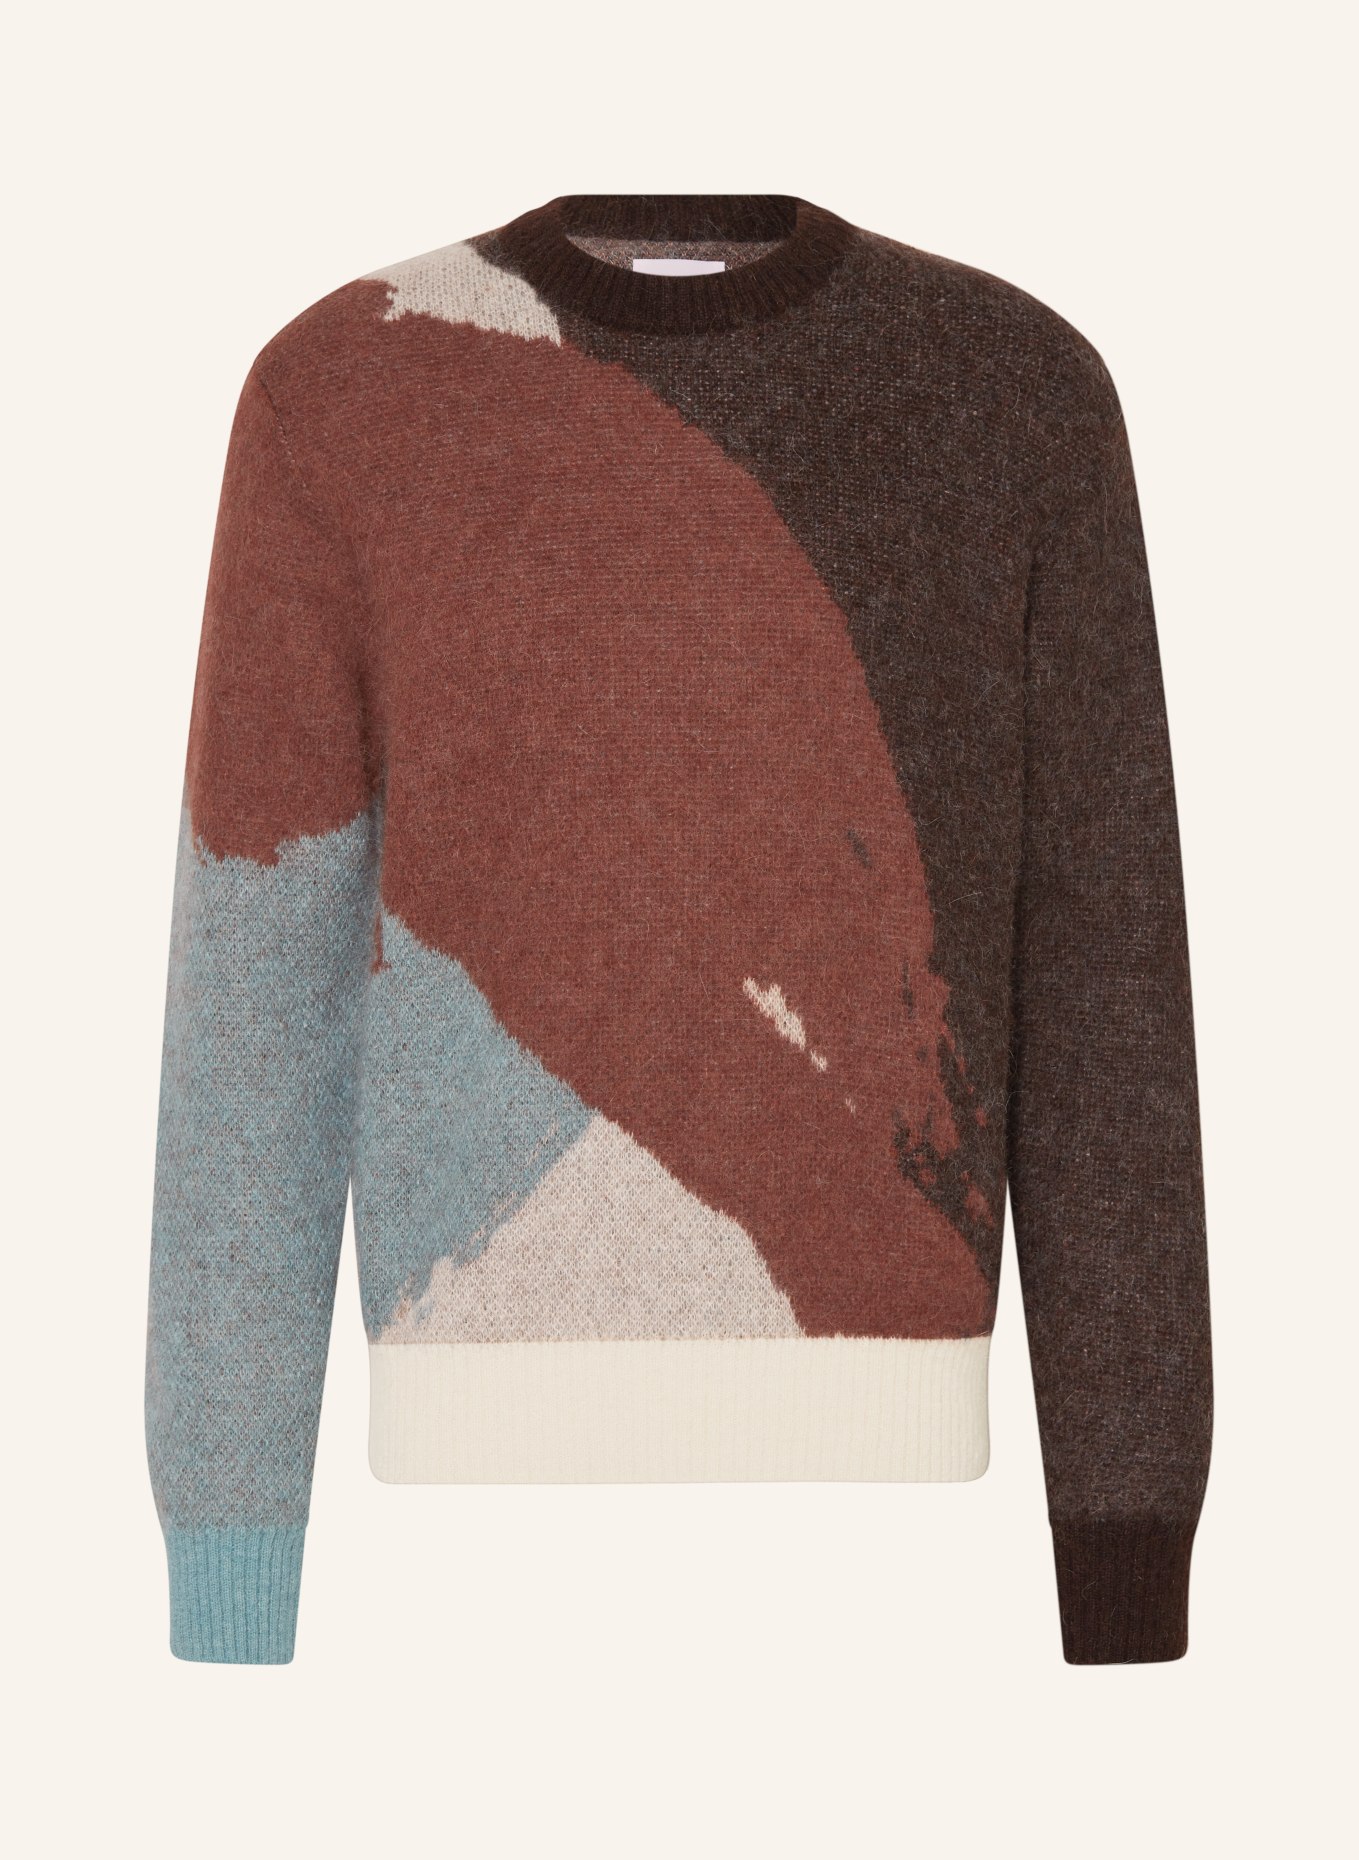 NORSE PROJECTS Pullover ARLID mit Alpaka und Mohair, Farbe: DUNKELBRAUN/ BEIGE/ MINT (Bild 1)